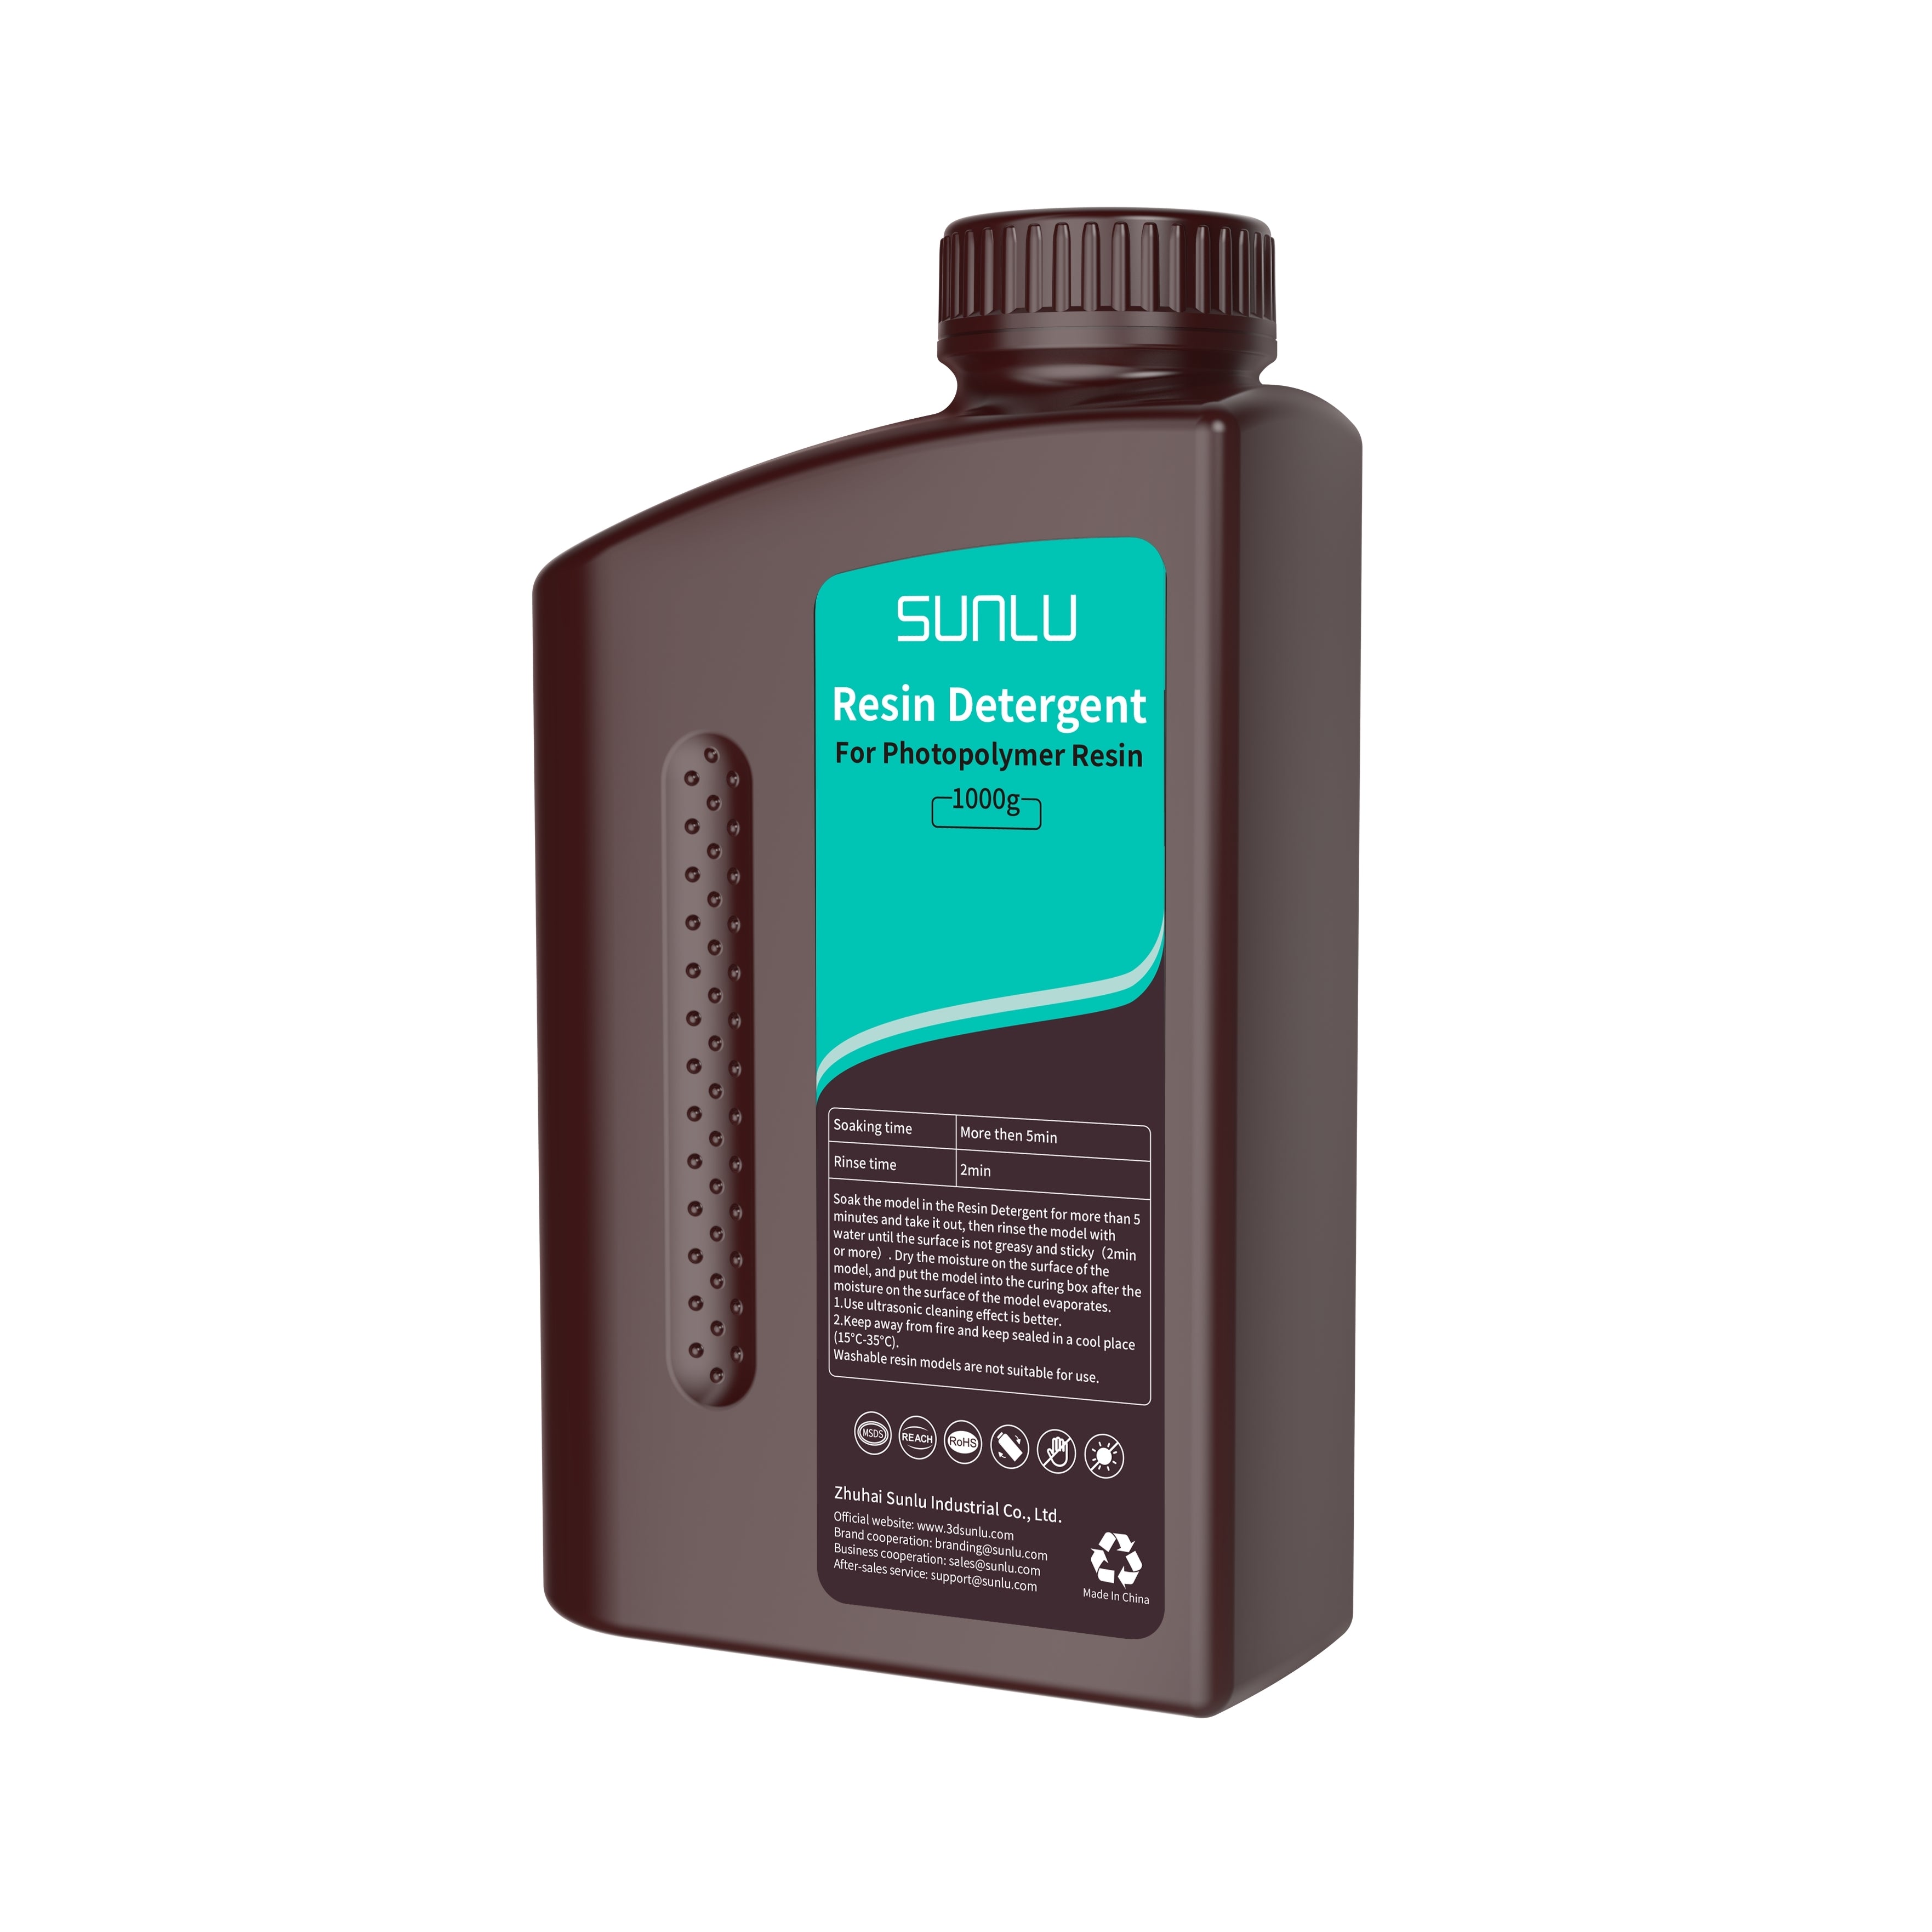 SUNLU Plant Based Resin, non toxic resin